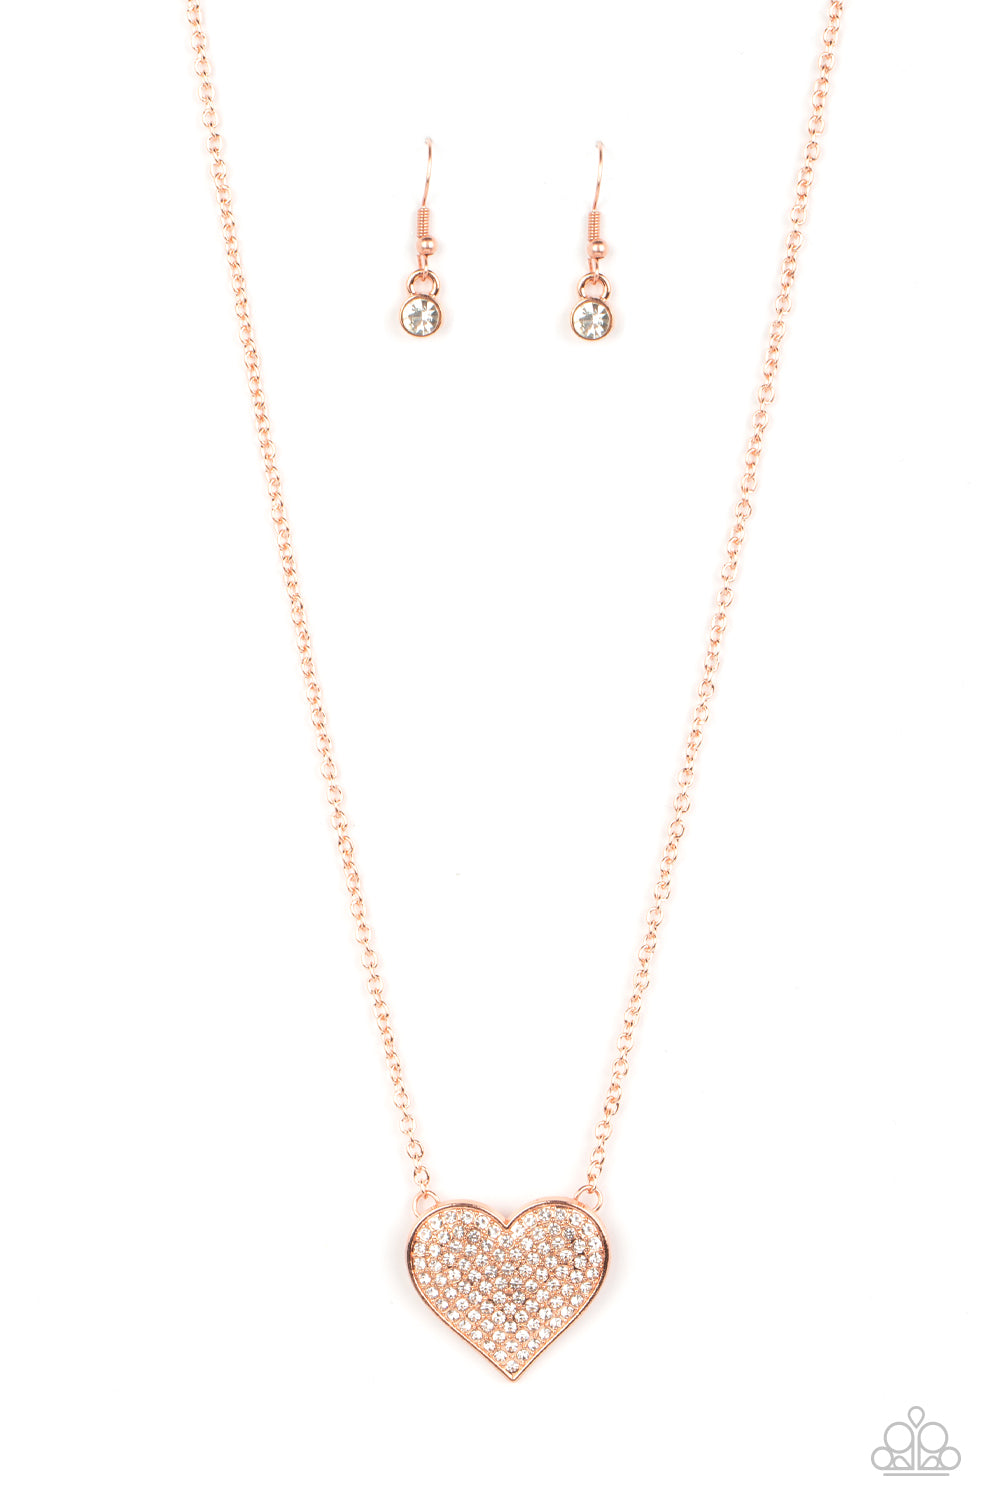 Spellbinding Sweetheart - Copper & White Rhinestone Heart Pendant Paparazzi Necklace & matching earrings